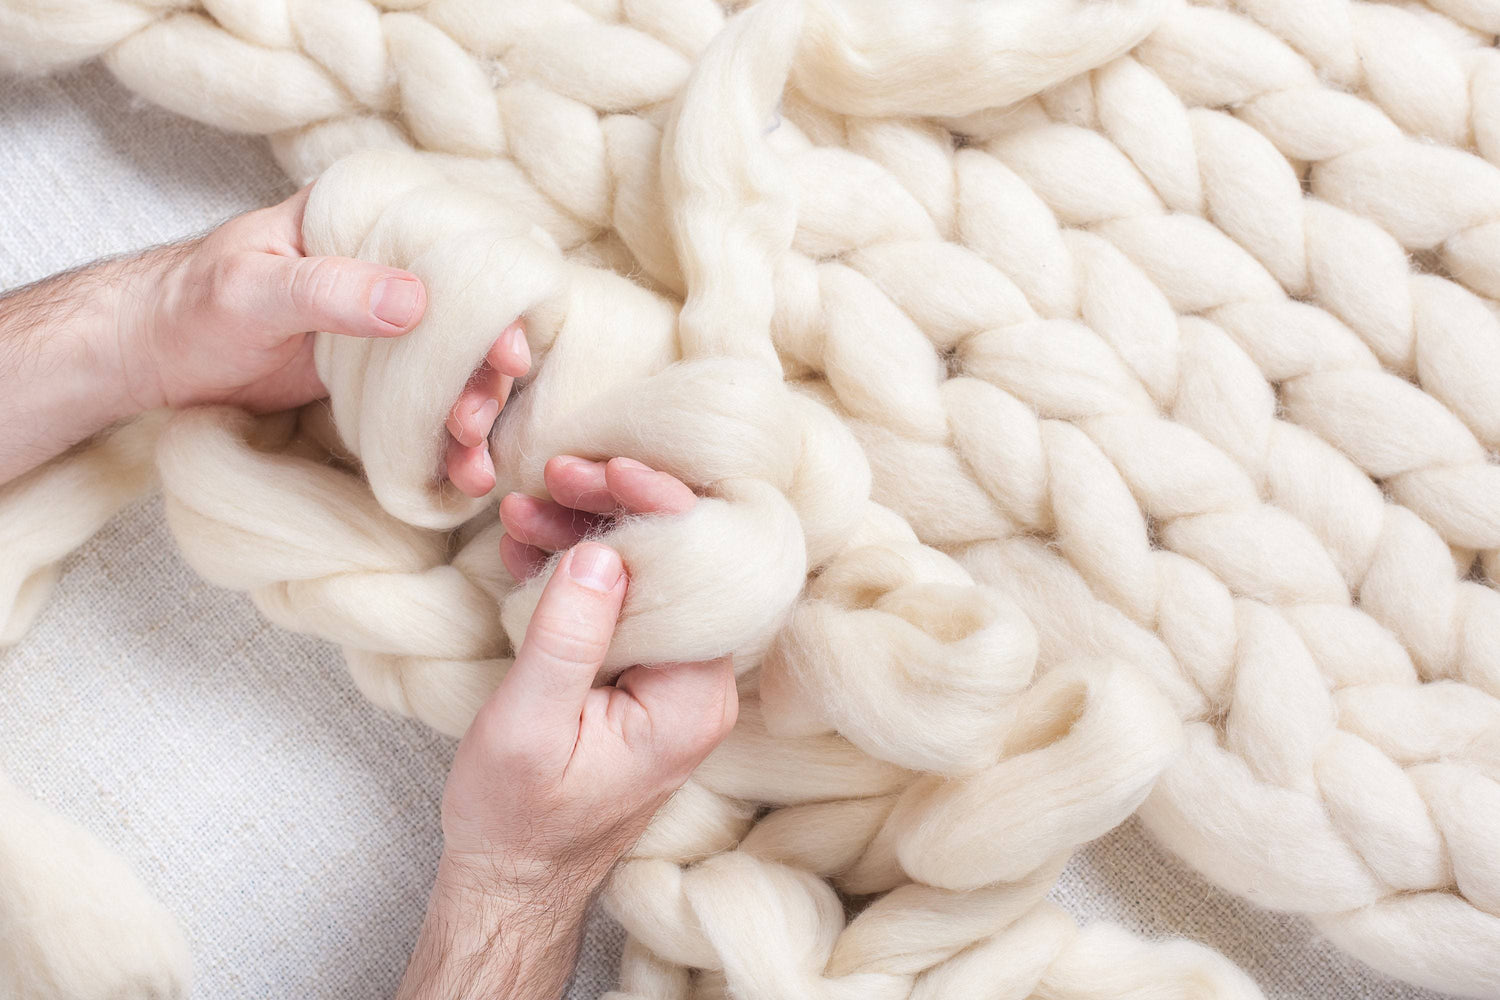  Wool yarn Roving Giant yarn Thick yarn Super chunky